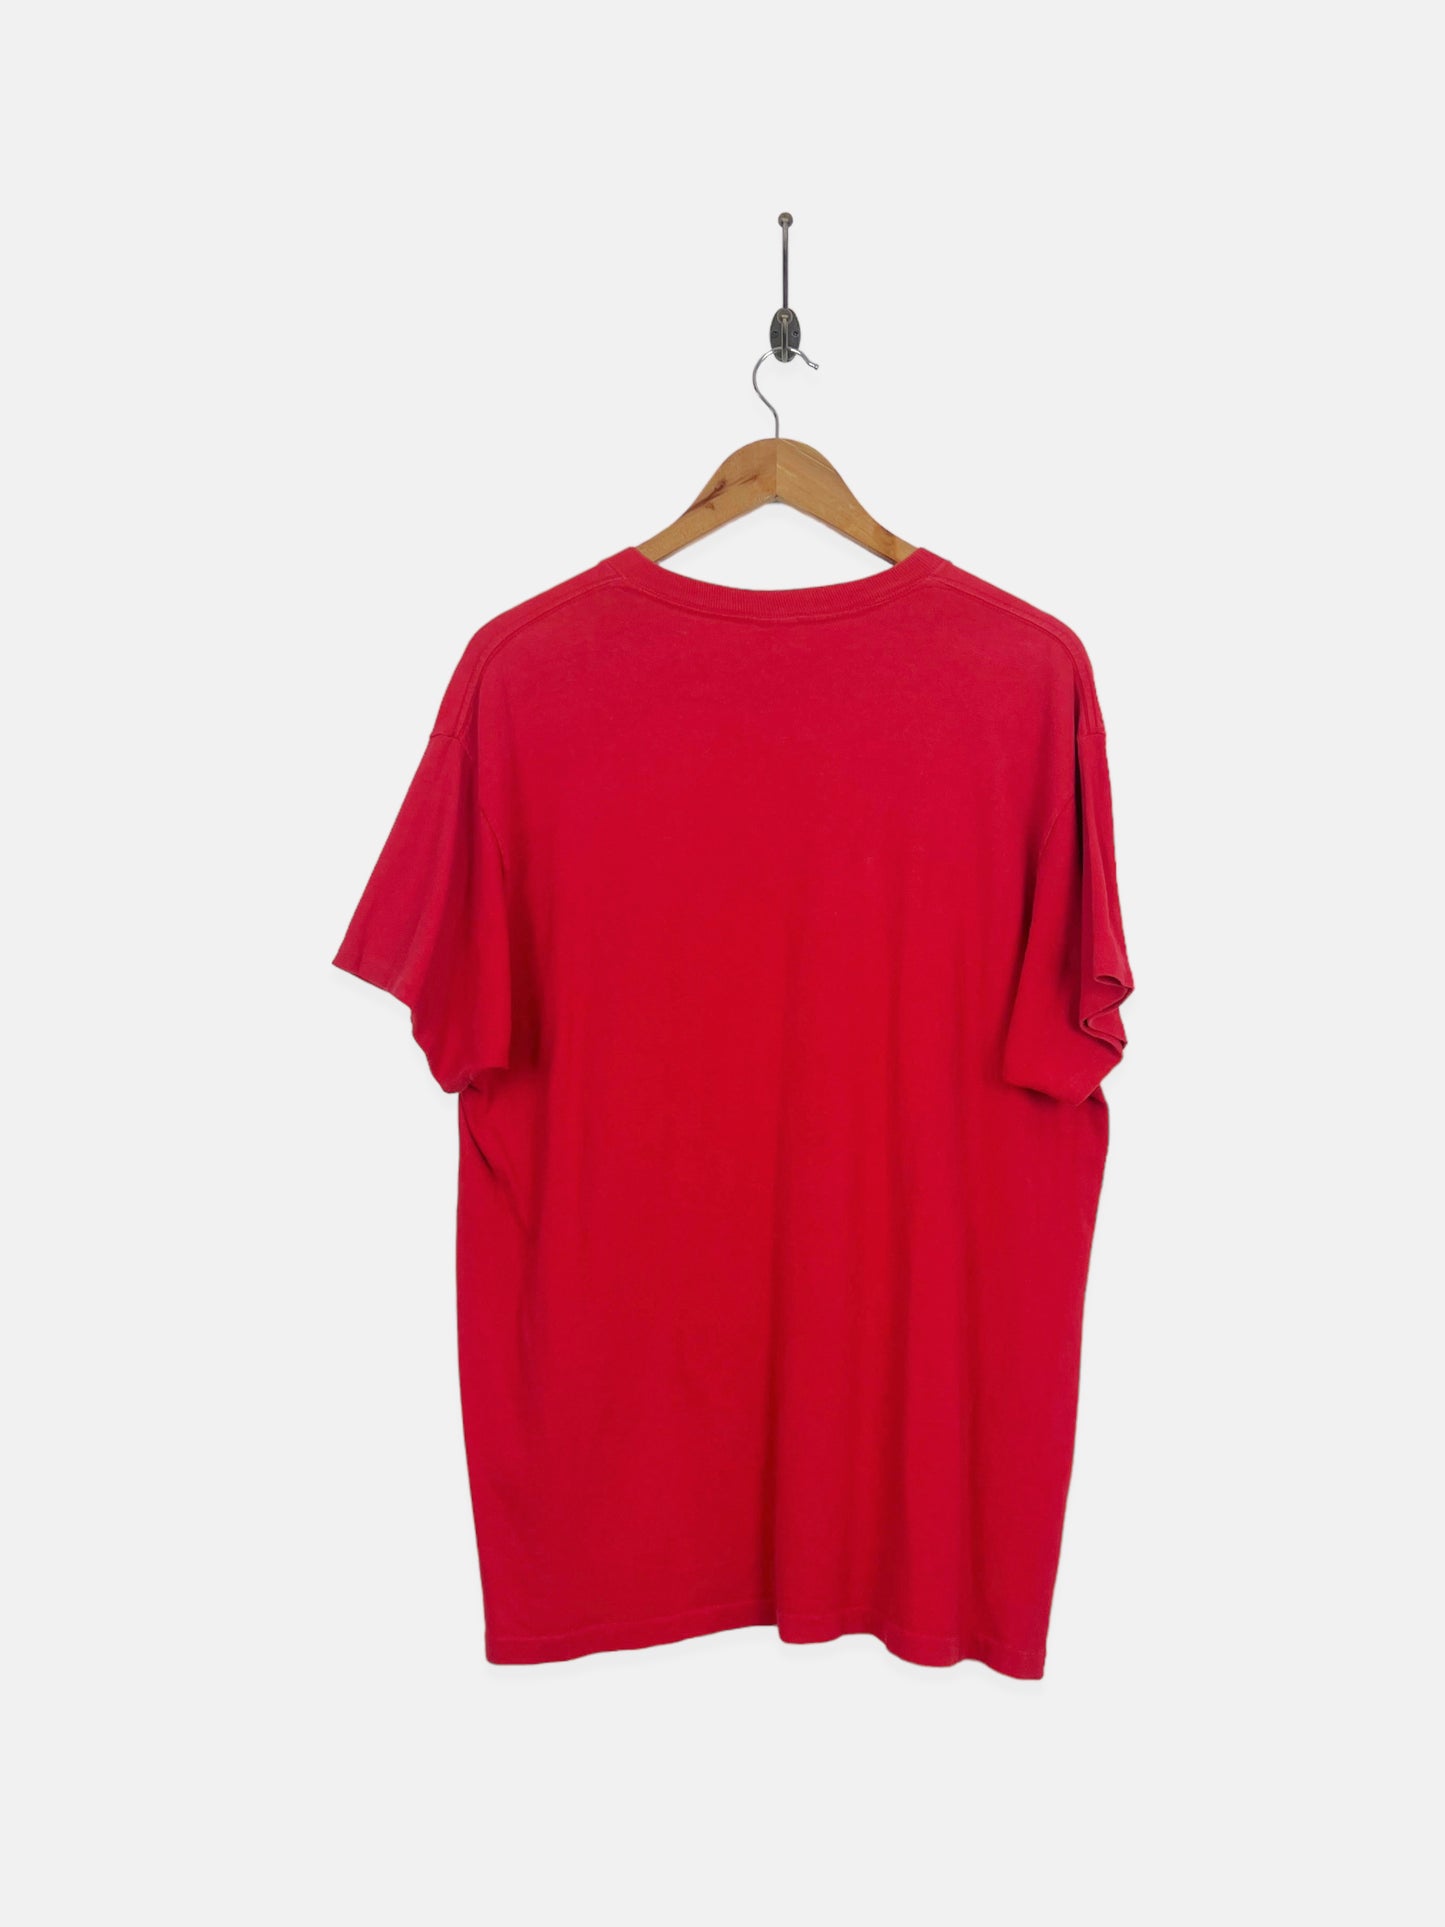 90's Nebraska Huskers USA Made Vintage T-Shirt Size M-L